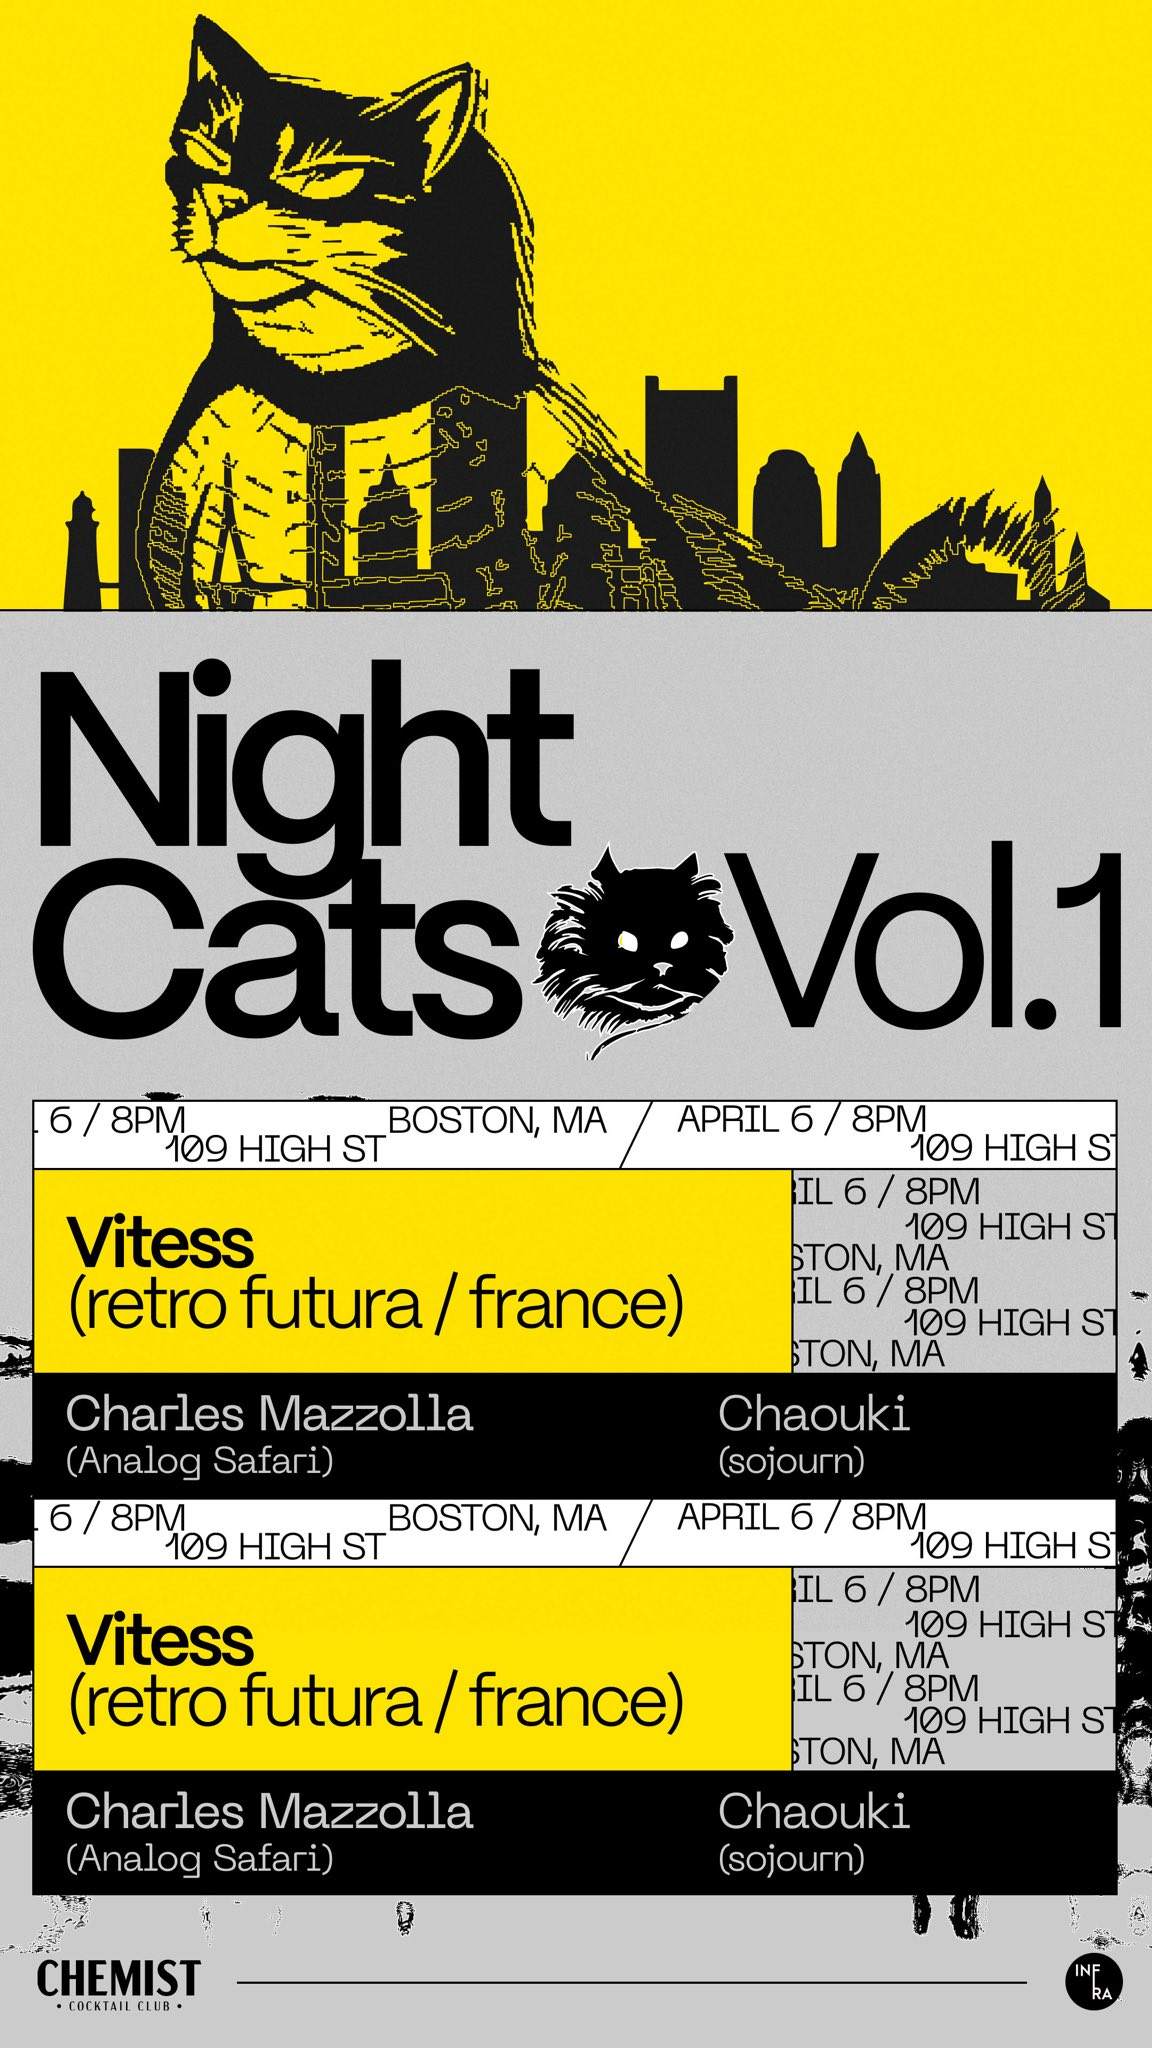 Night Cats Vol 1. with Vitess - フライヤー表